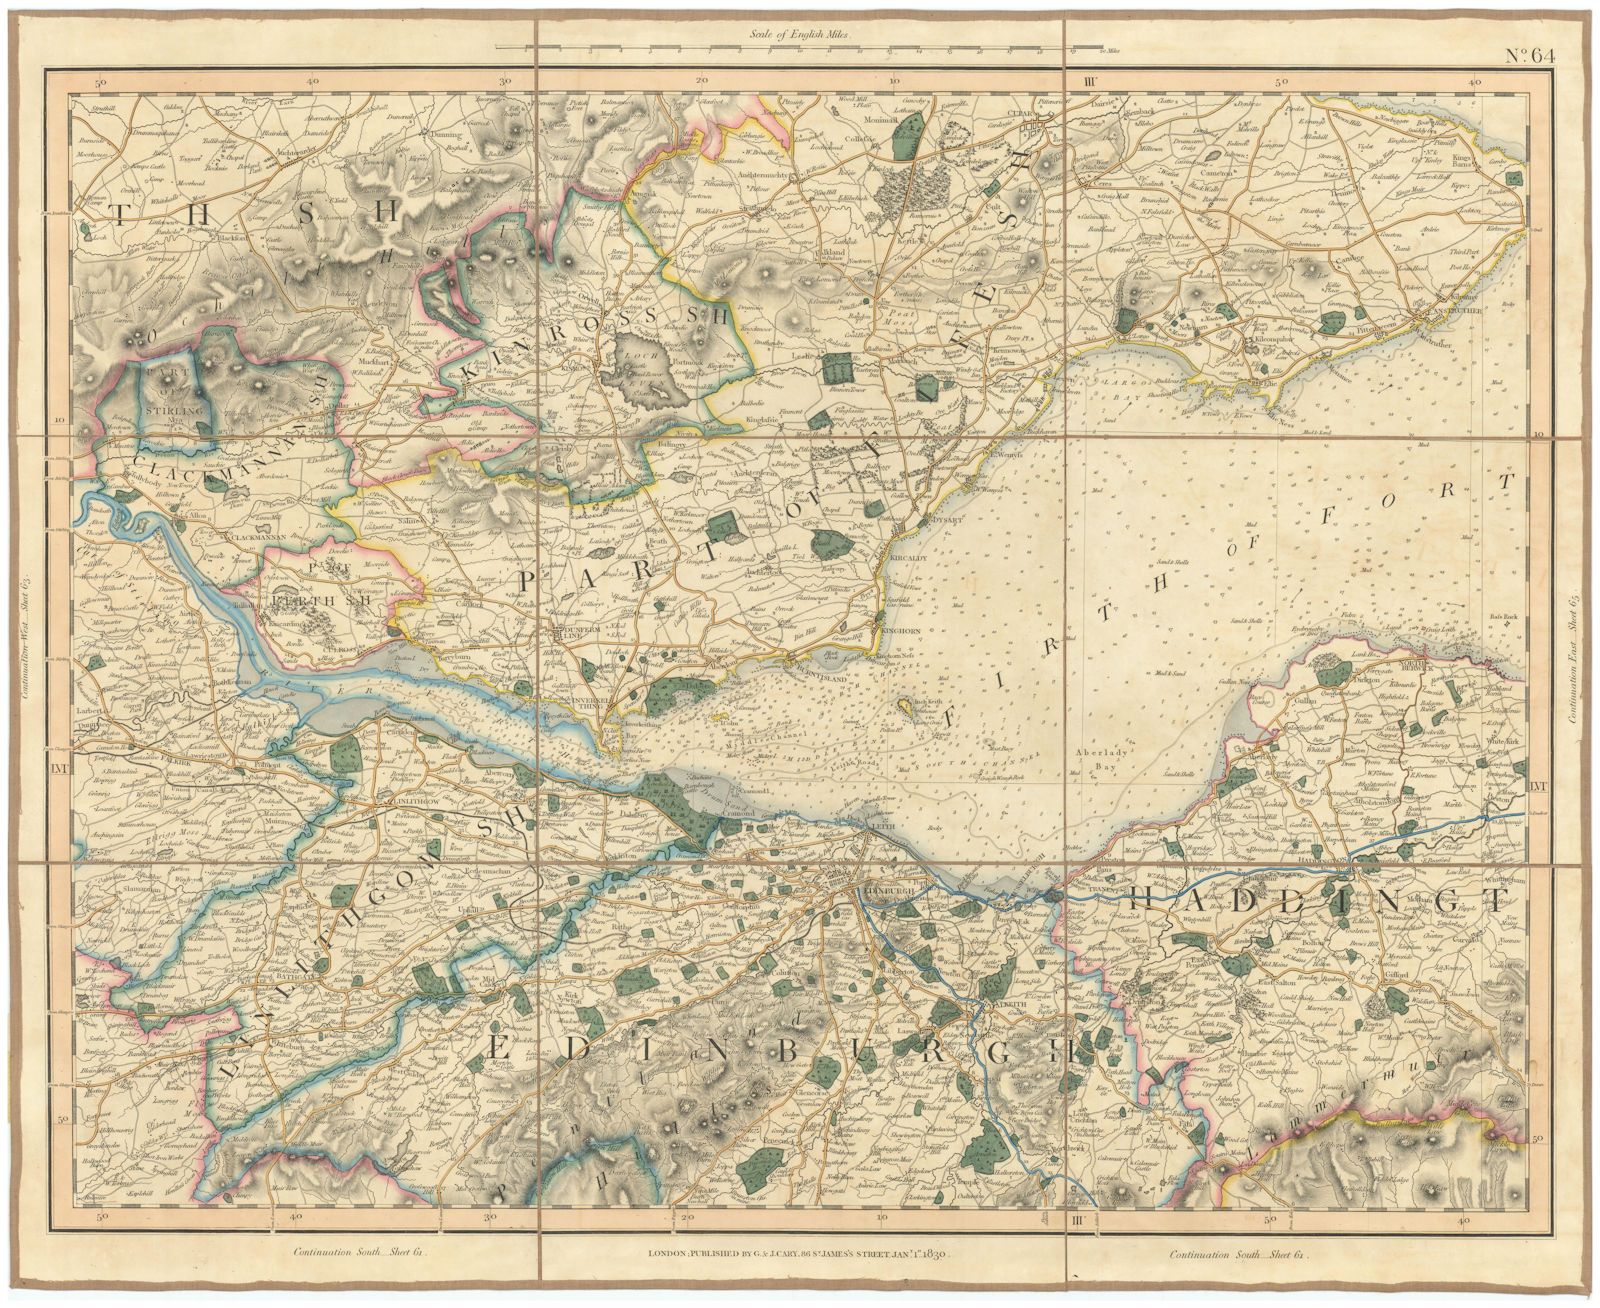 FIRTH OF FORTH. Fife & Lothian. Linlithgow Edinburgh Dunfermline. CARY 1832 map